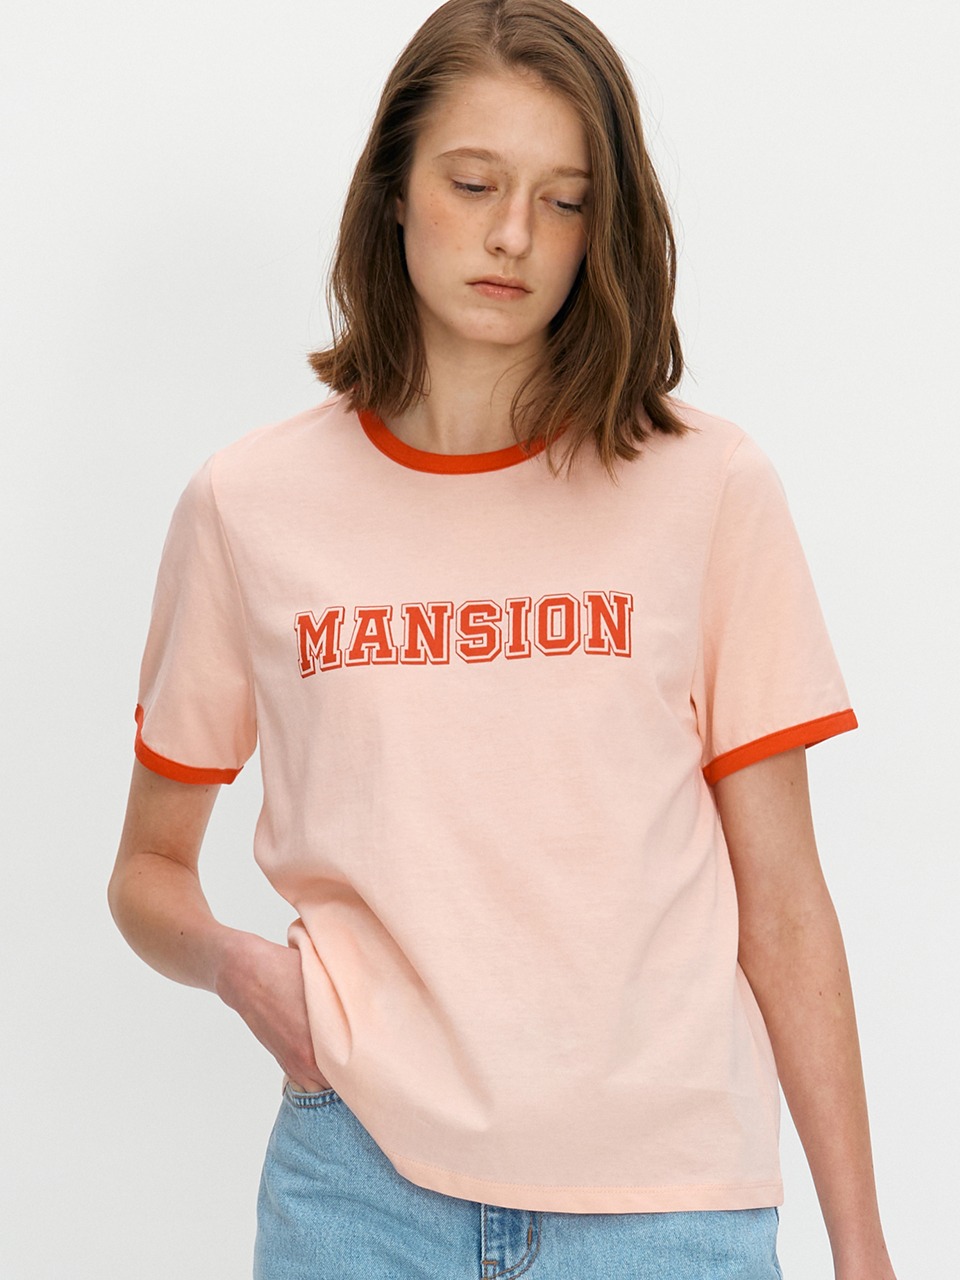 Mansion binding tee - Peach